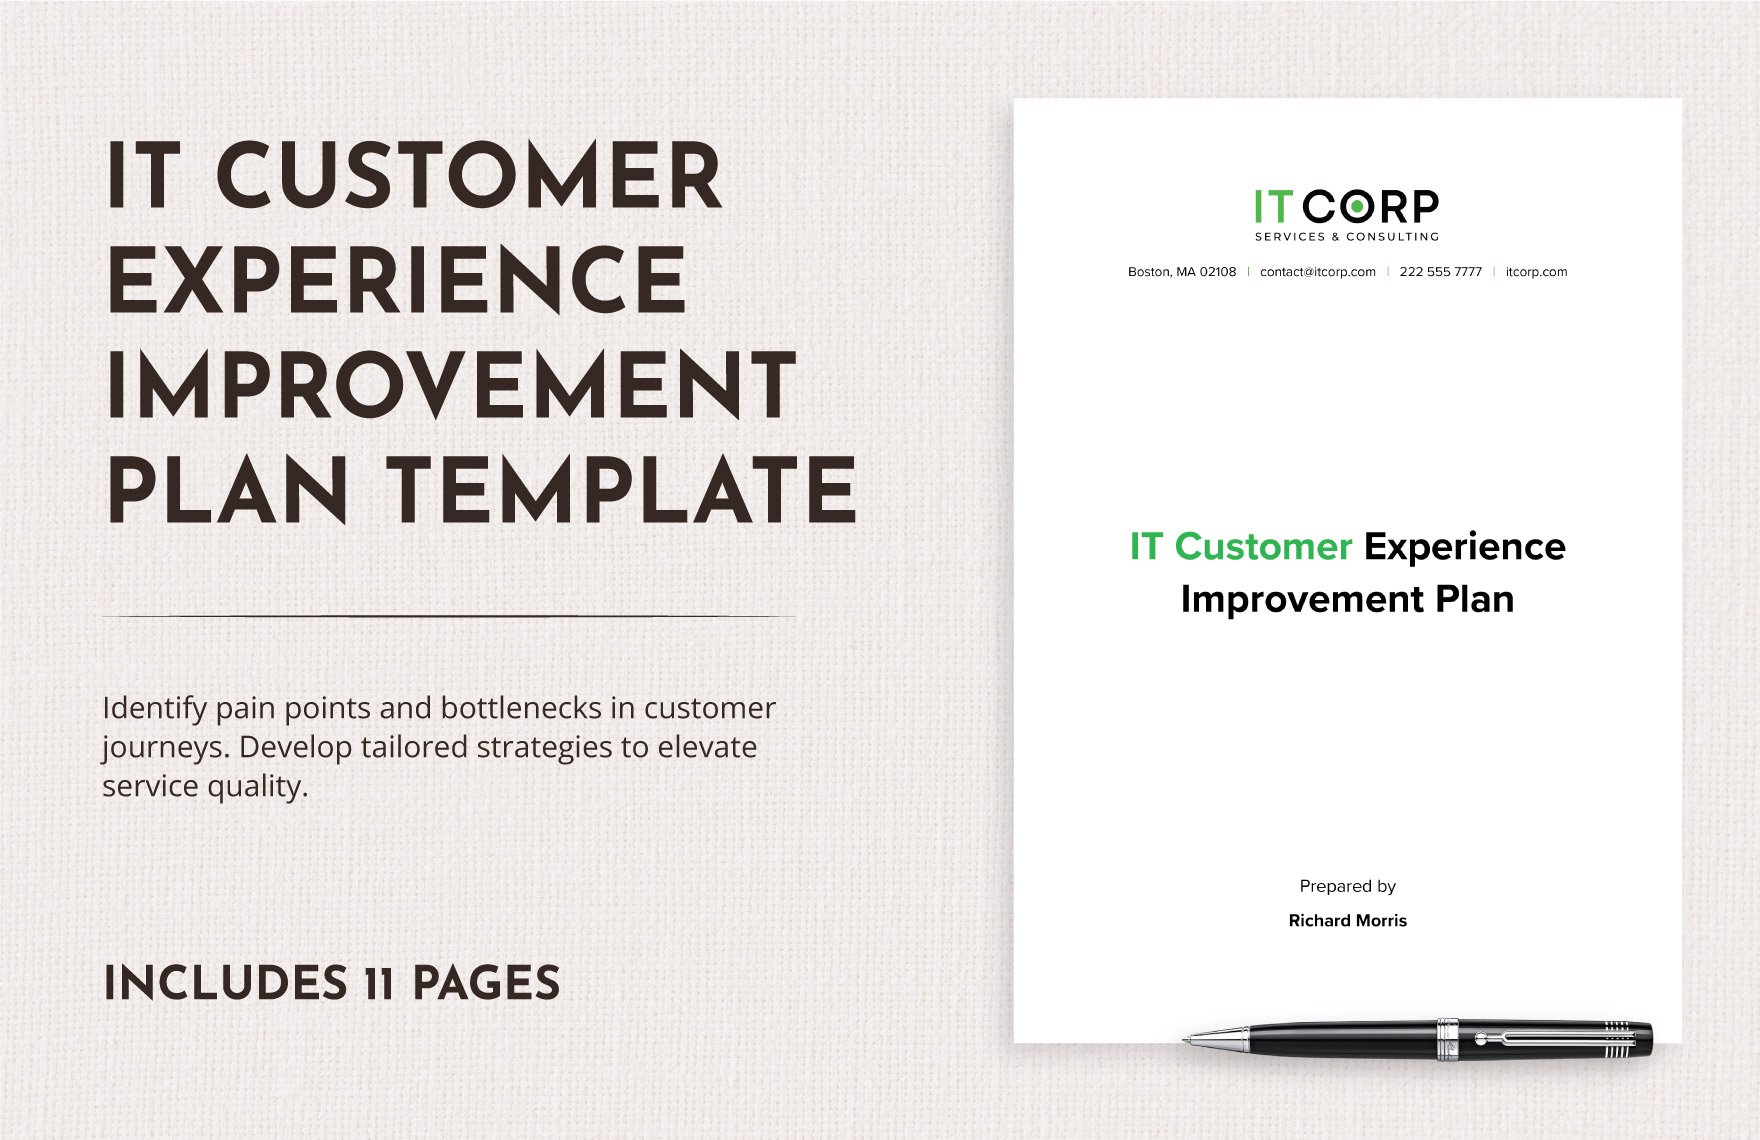 IT Customer Experience Improvement Plan Template in Word, Google Docs, PDF